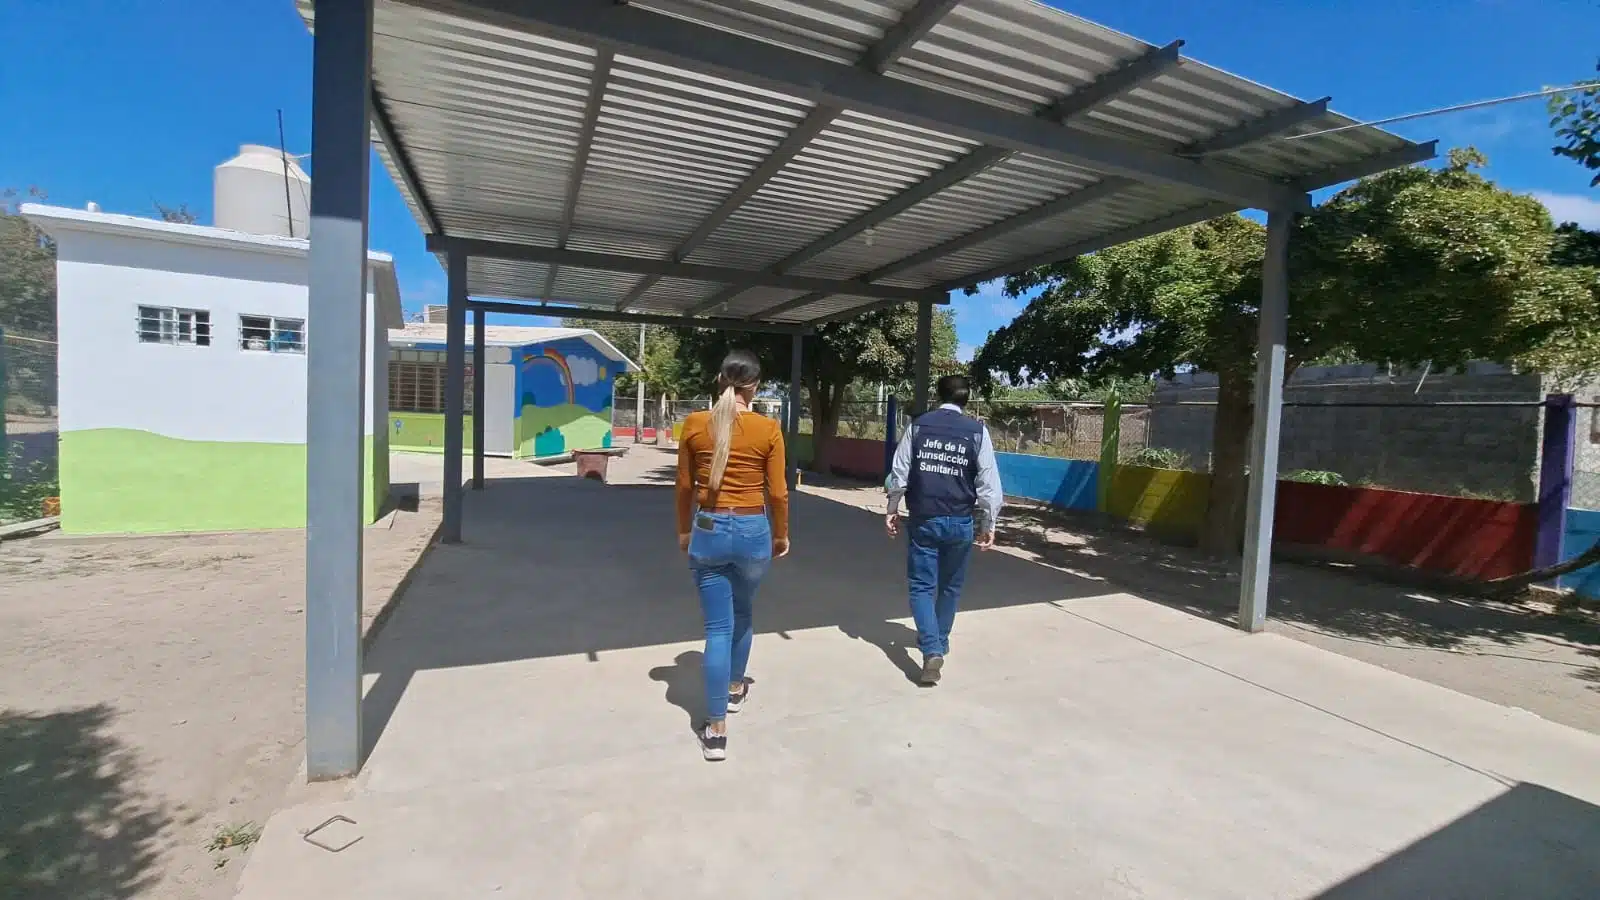 Preescolar “Guadalupe Gámez Portillo” del sector El Sabino, Higuera de Zaragoza